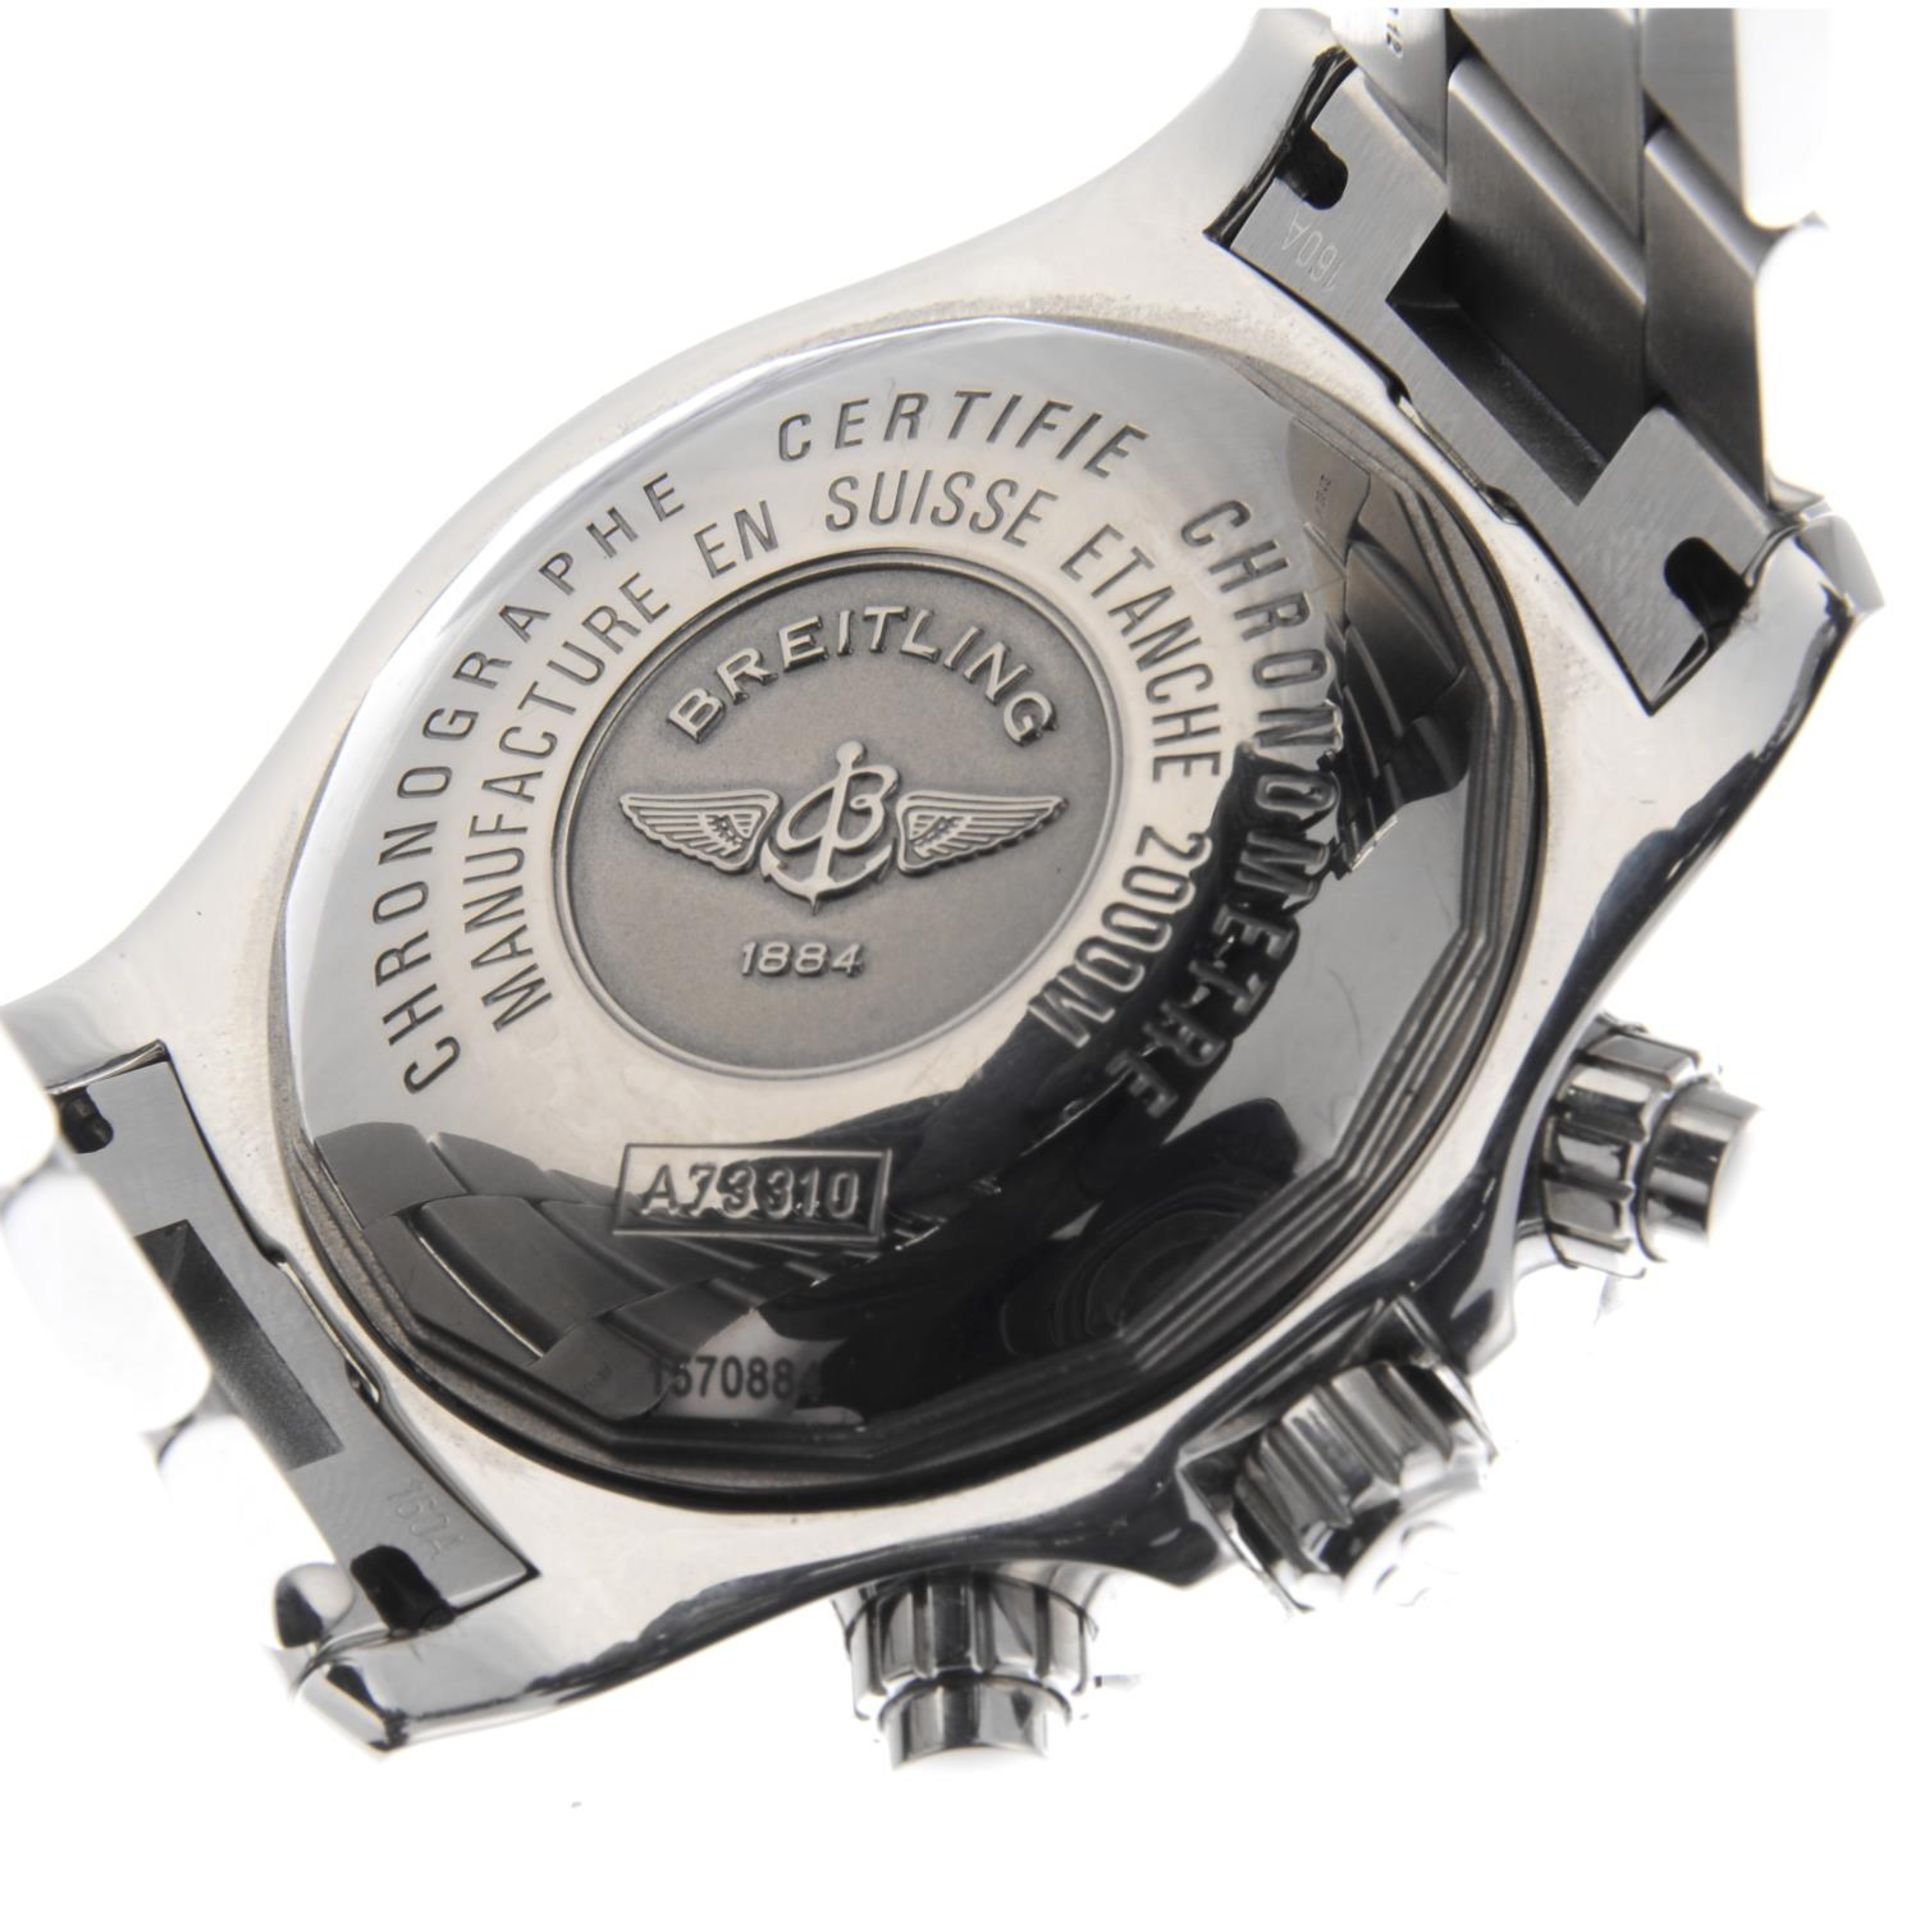 BREITLING - a gentleman's SuperOcean chronograph bracelet watch. - Image 5 of 7